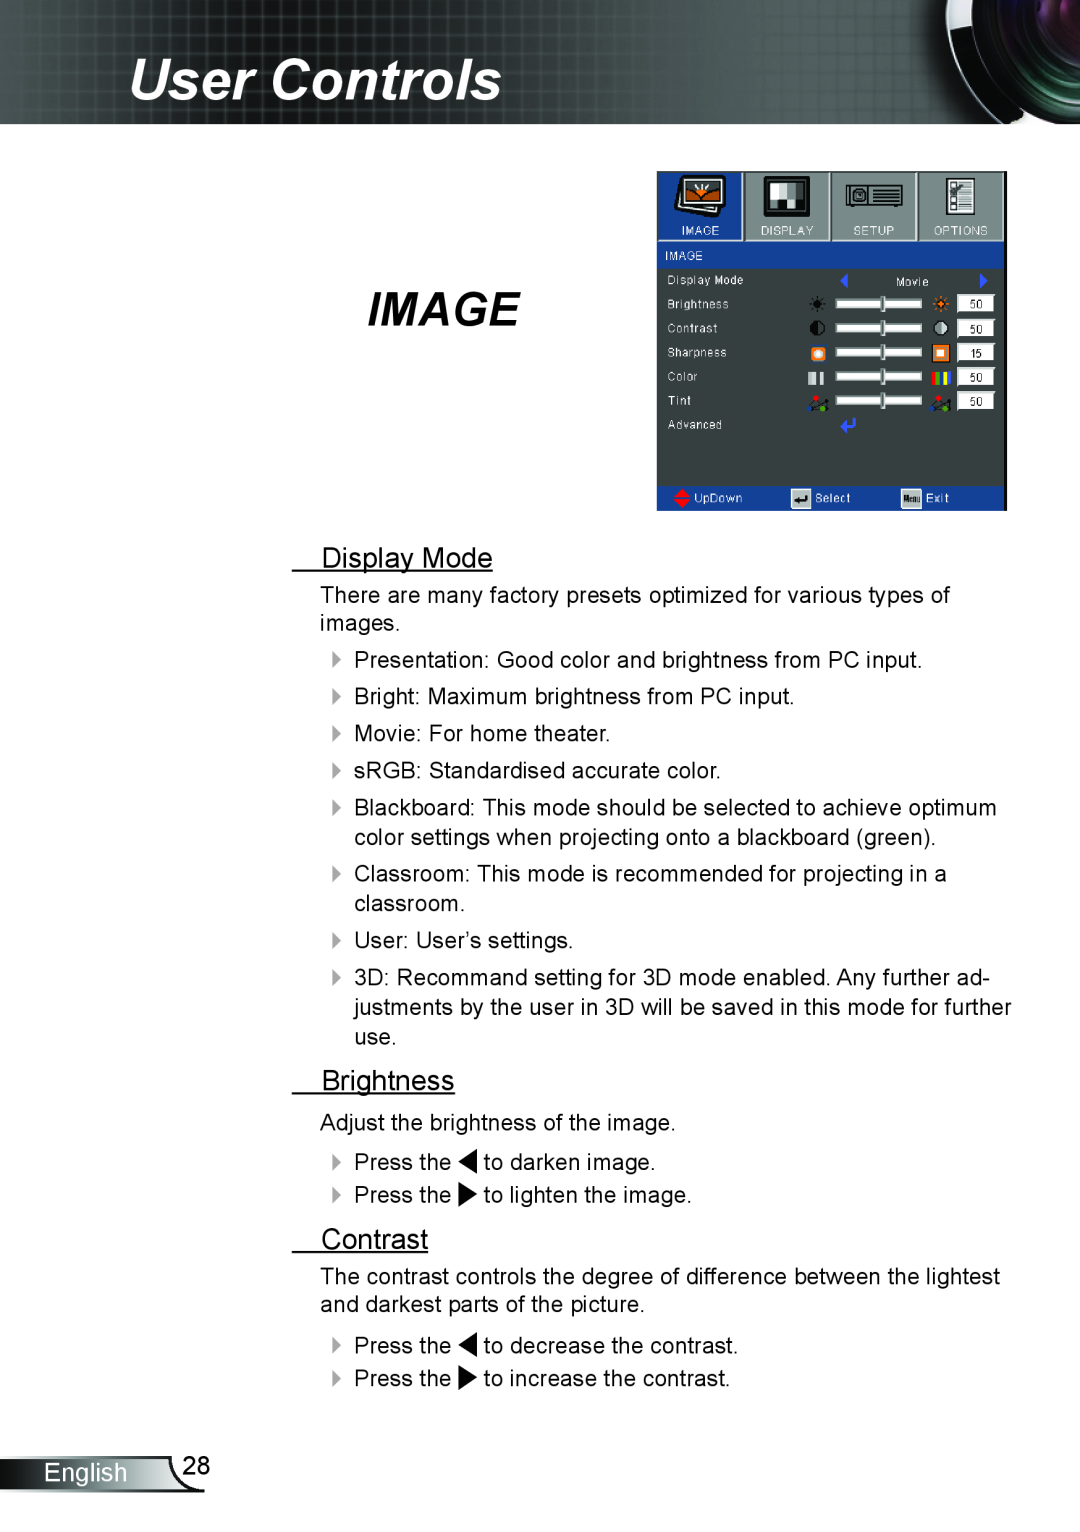 Optoma Technology TW695UT3D manual Image, Display Mode, Brightness, Contrast, User Controls, English 